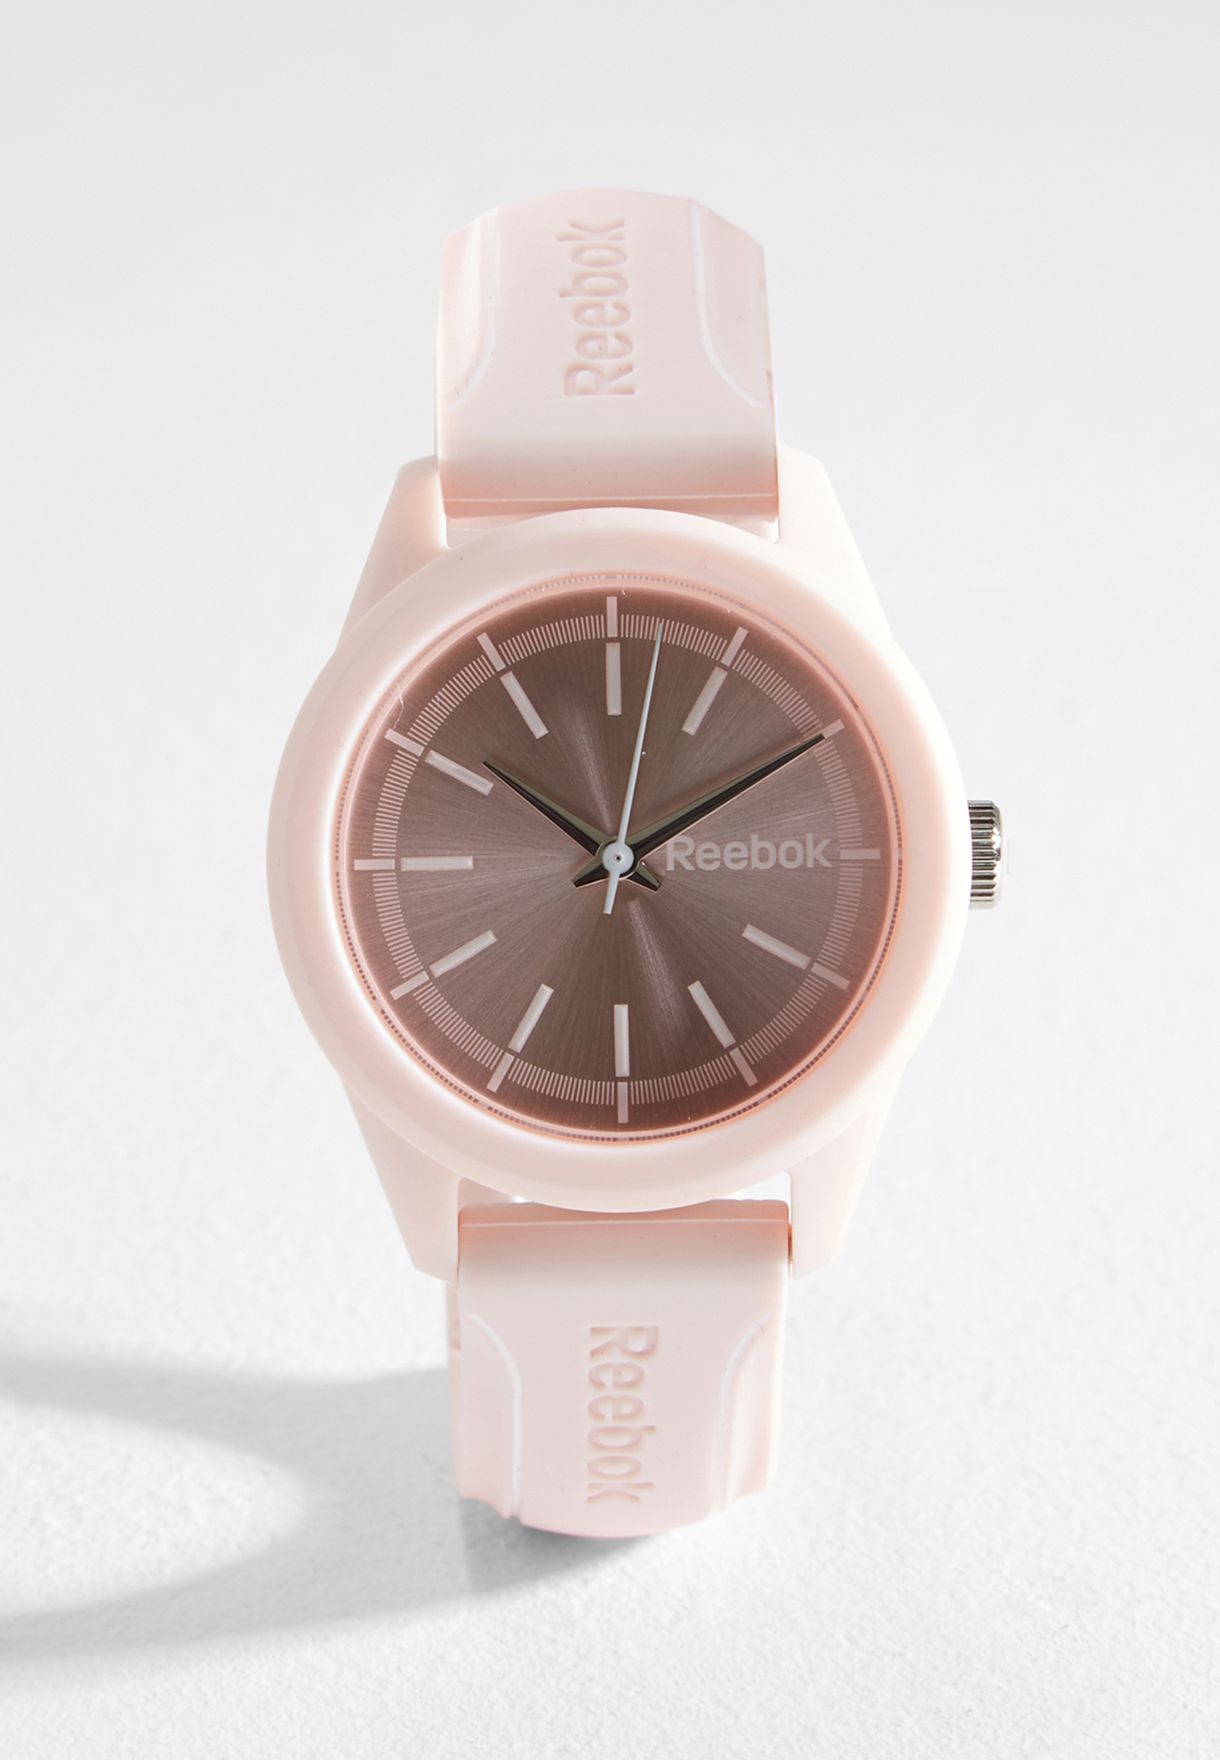 reebok spindrop watch price